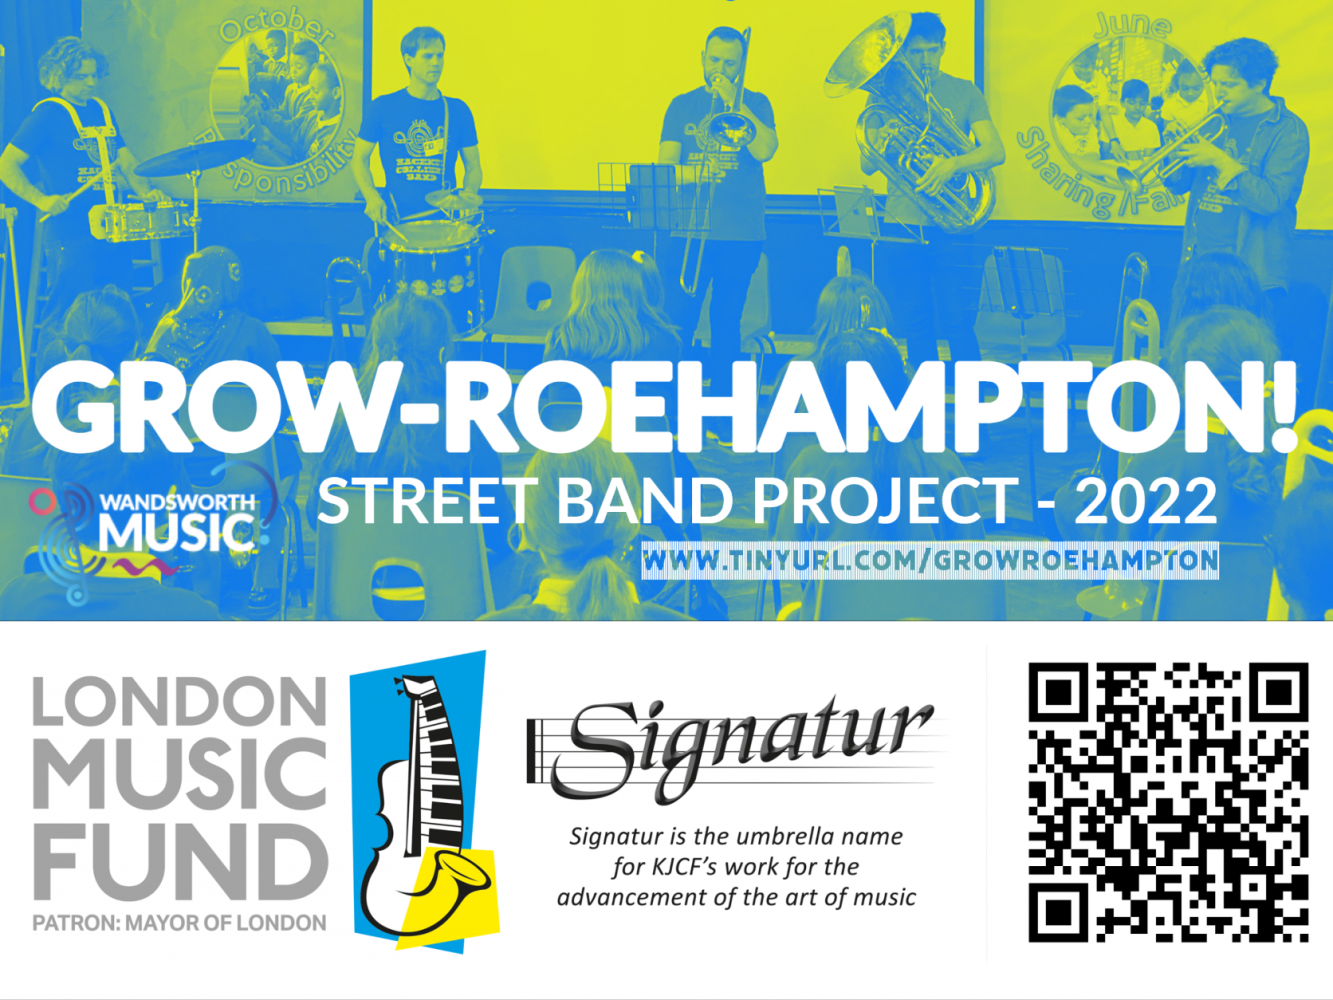 Grow Roehampton Street Band